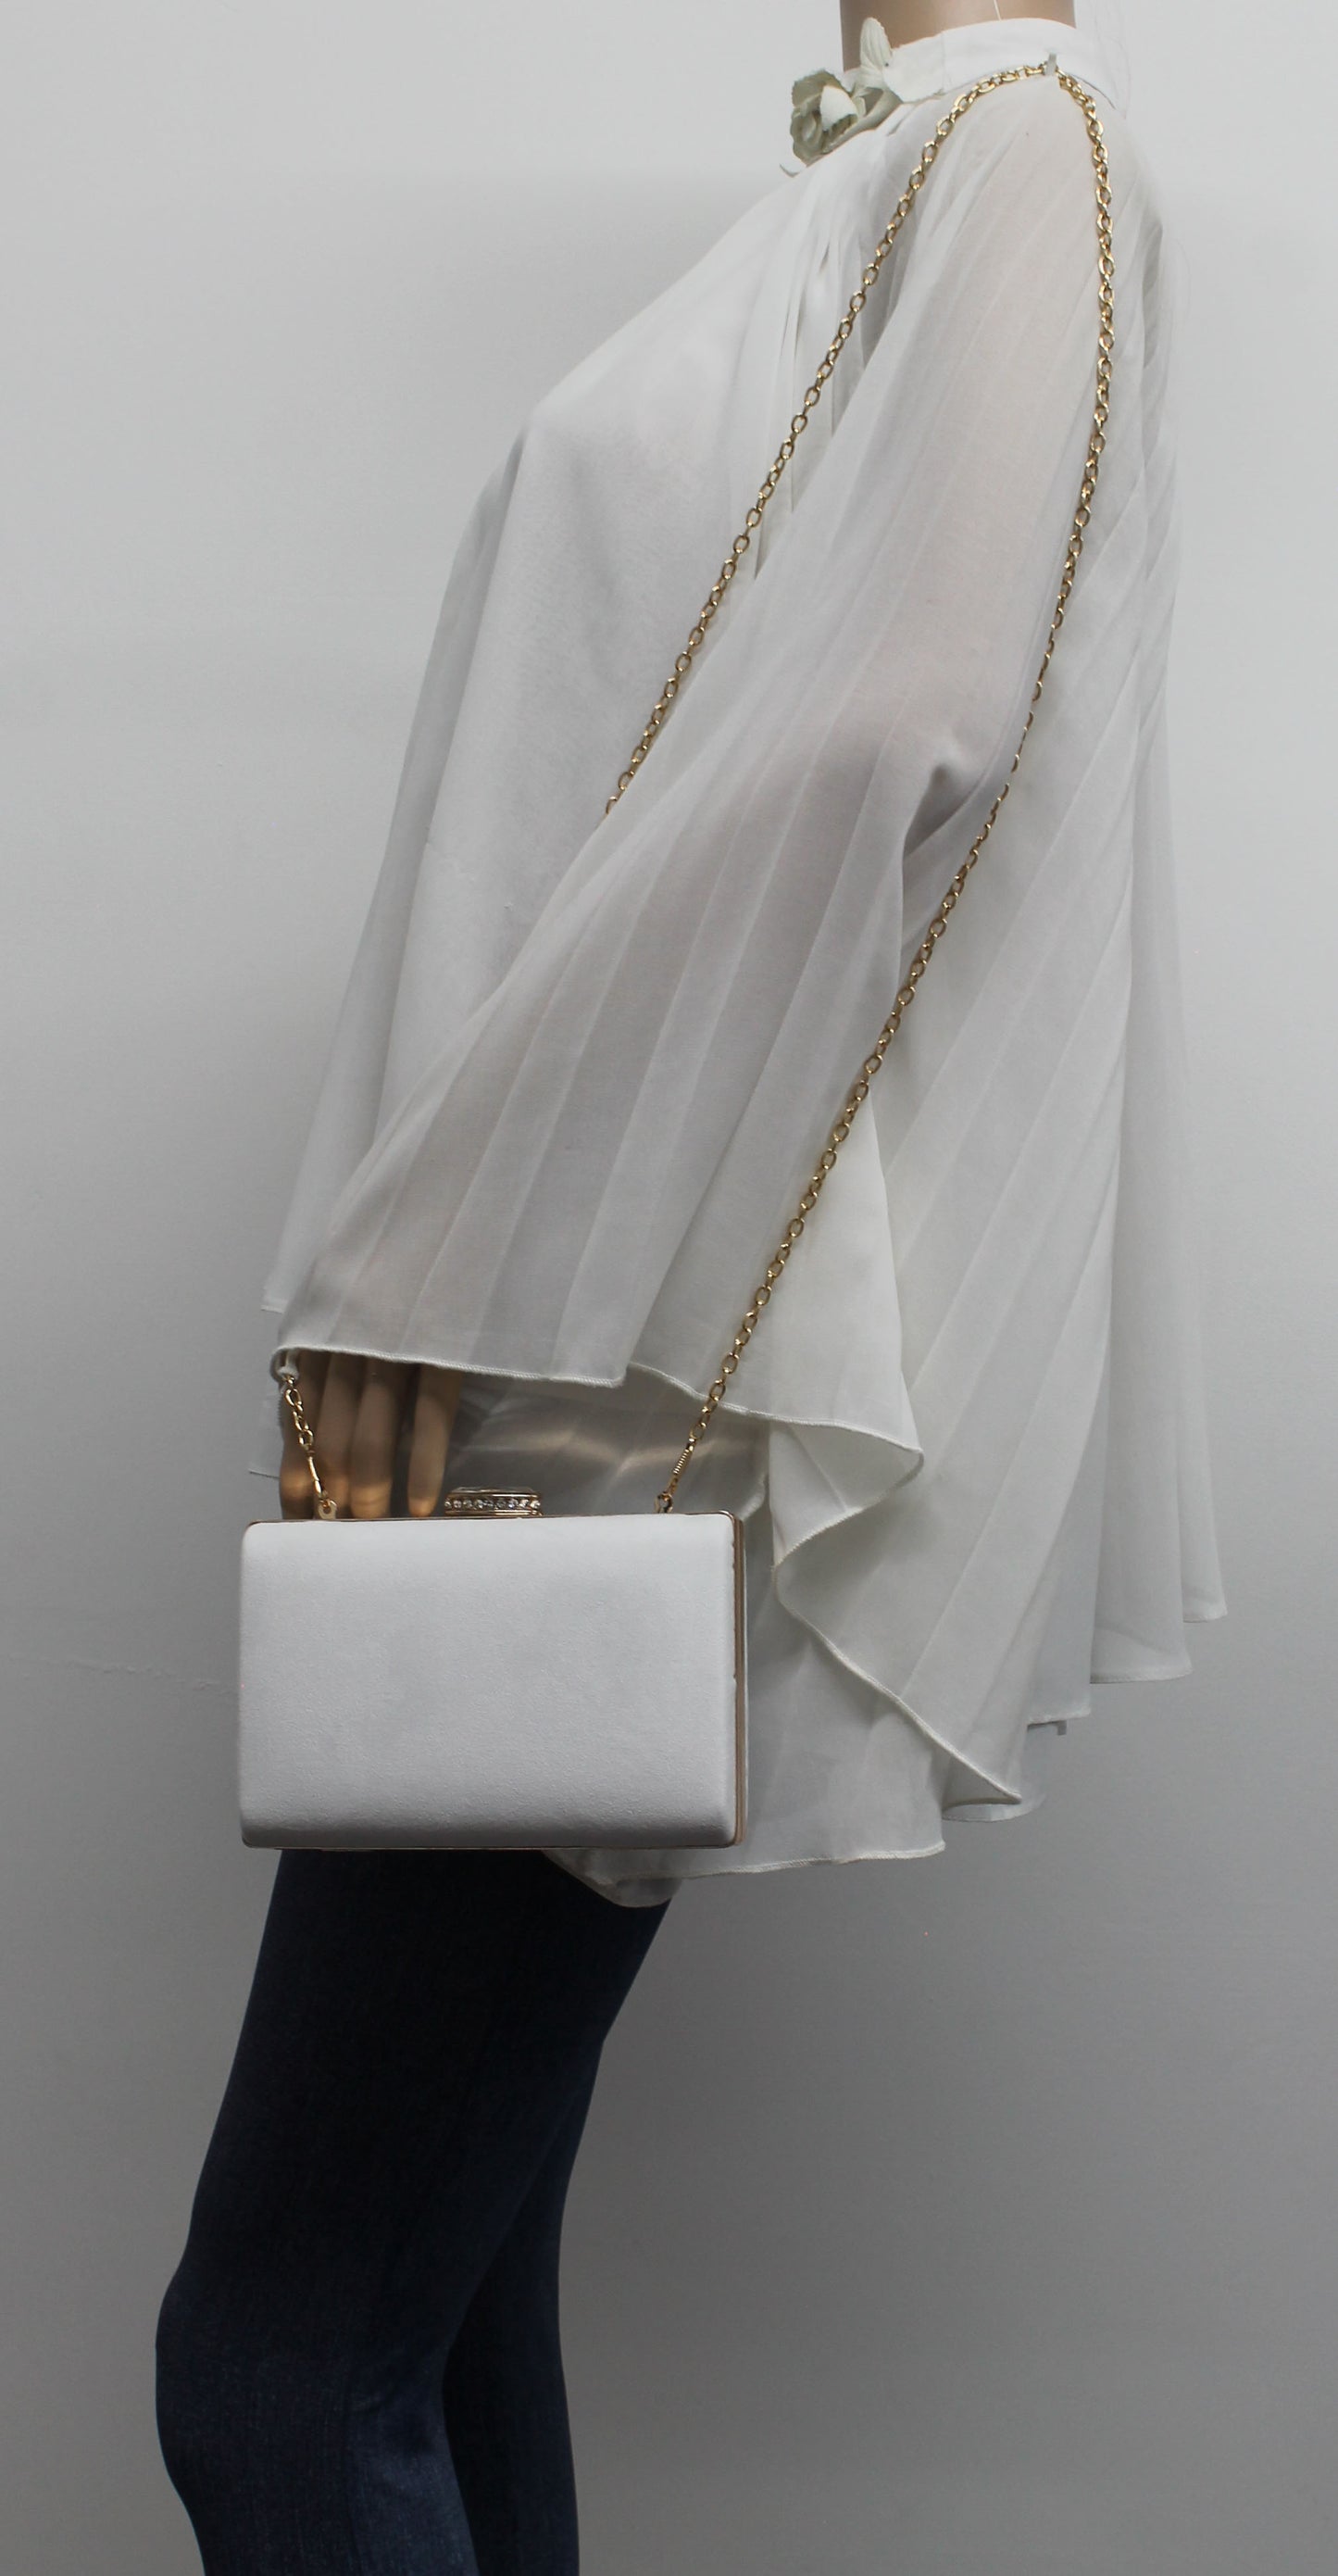 SWANKYSWANS Surrey Suede Clutch Bag White Cute Cheap Clutch Bag For Weddings School and Work